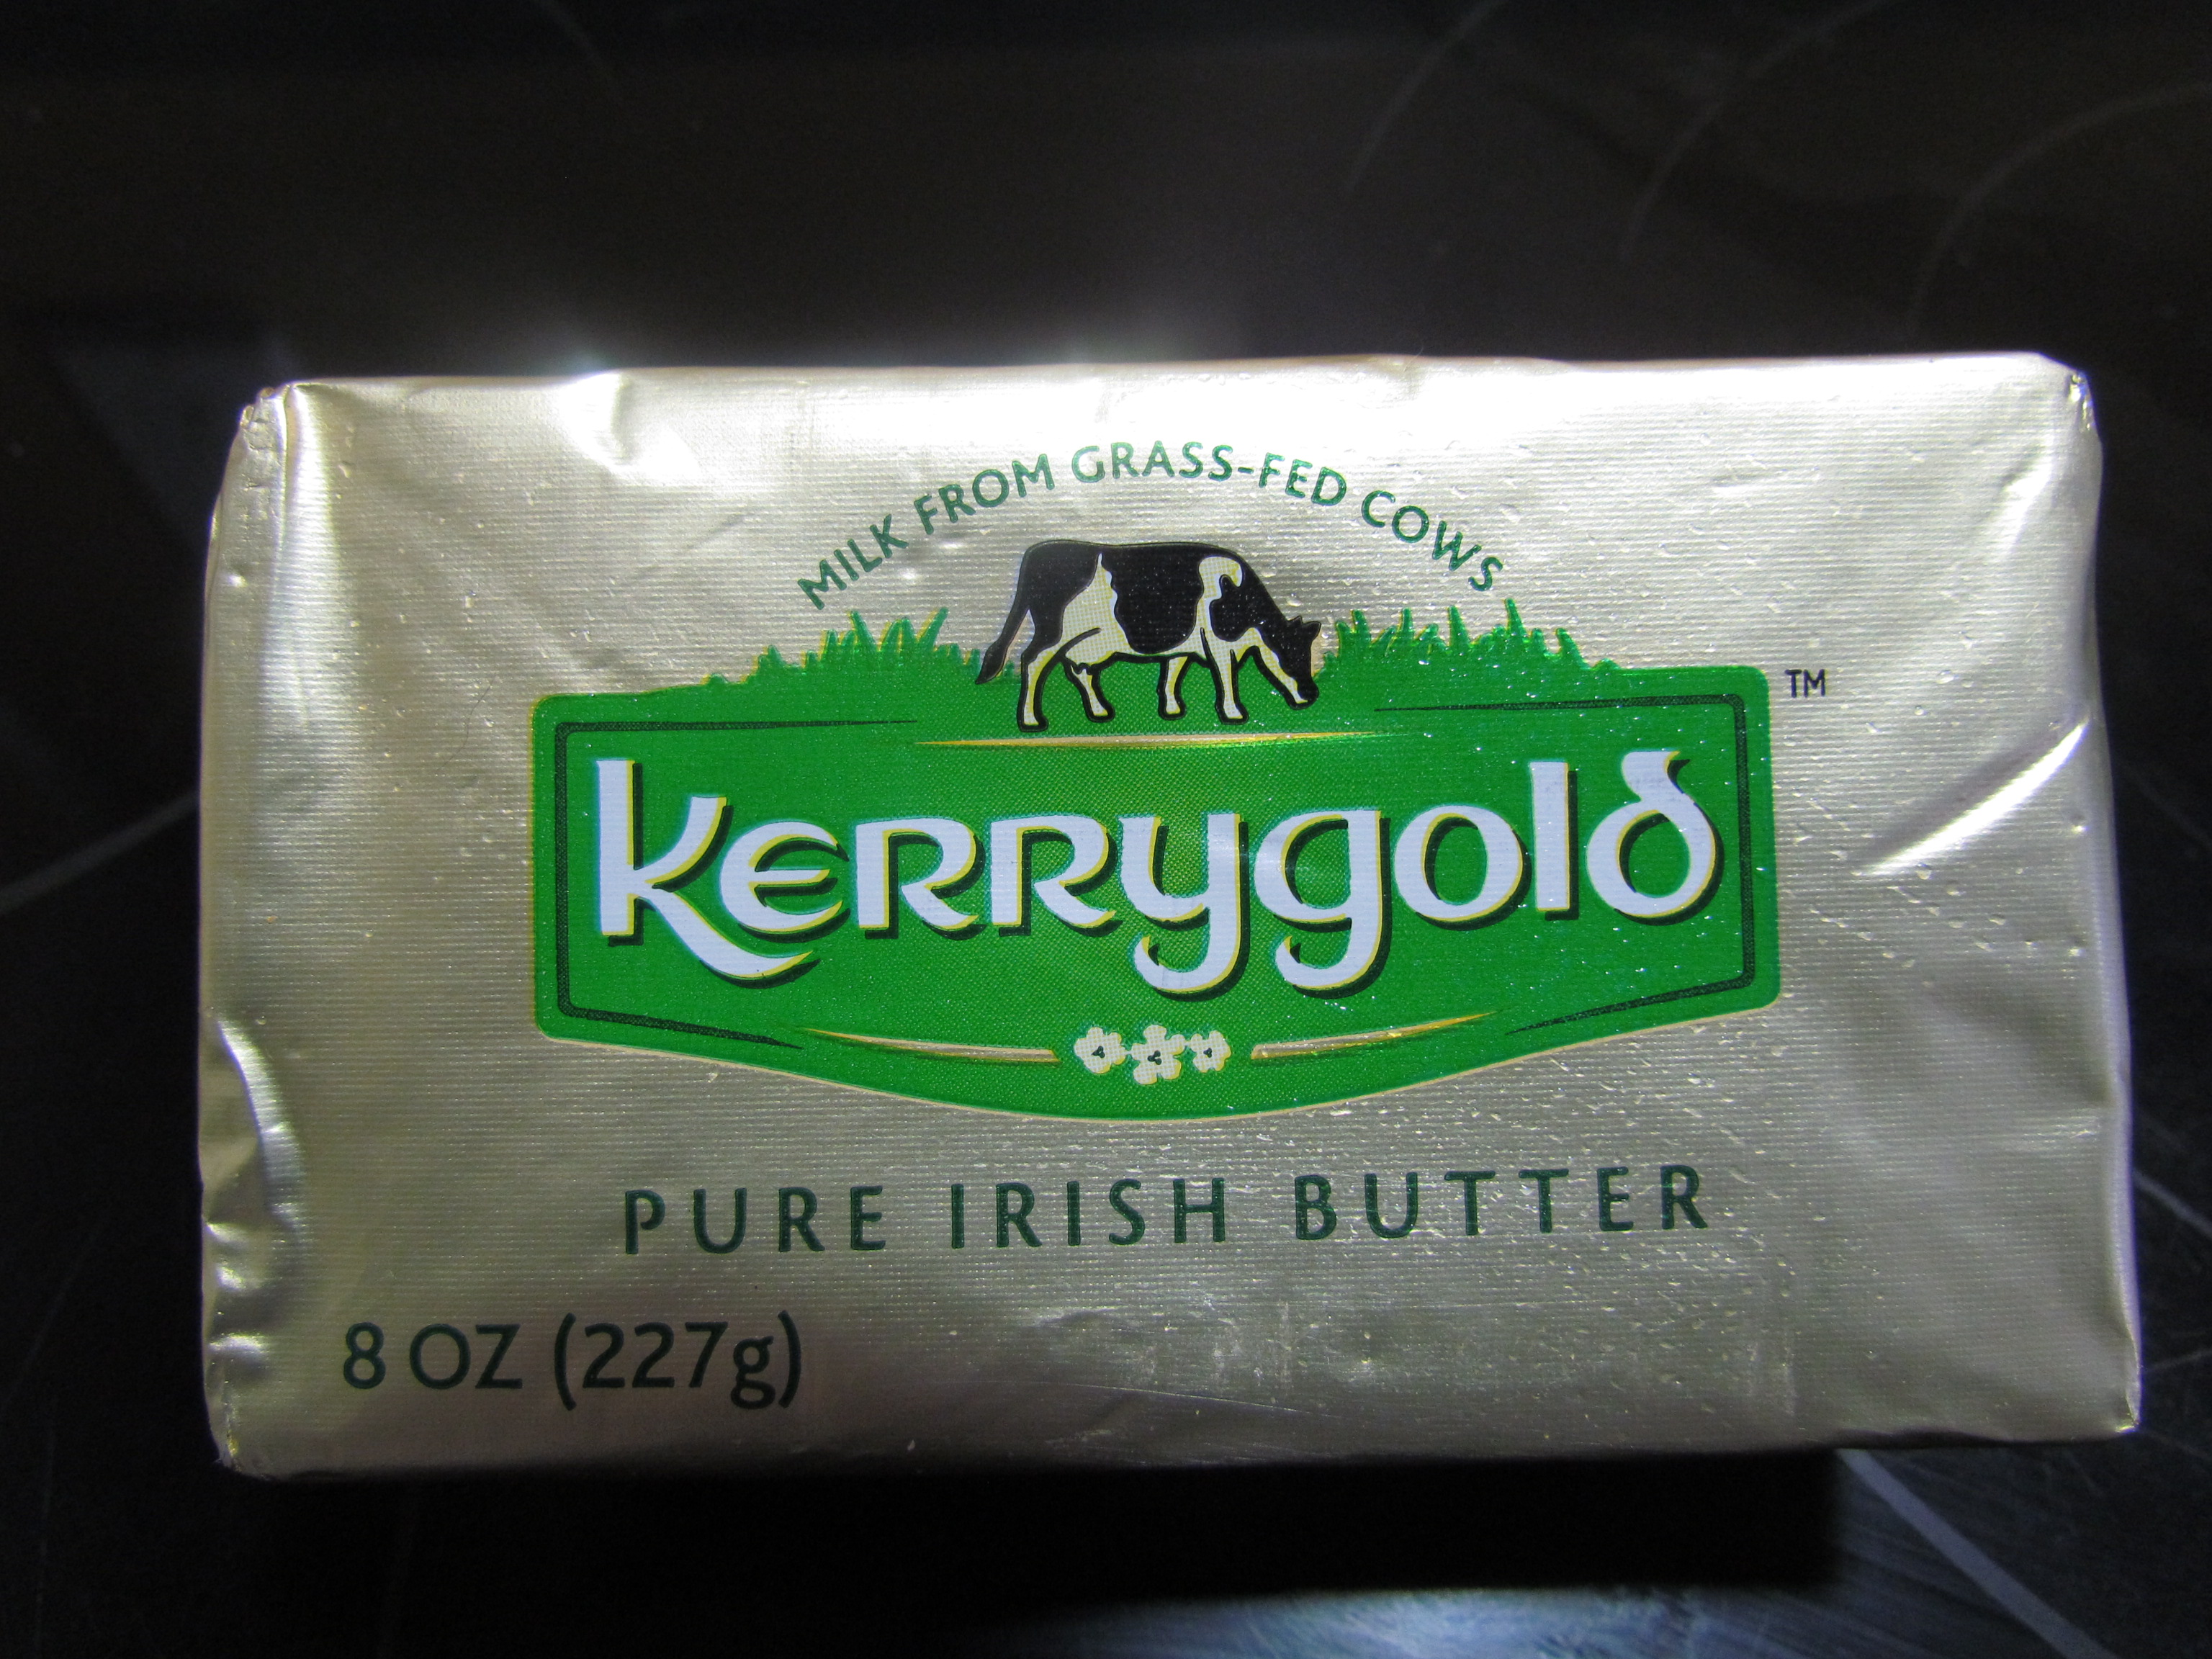 KerryGold pure irish butter